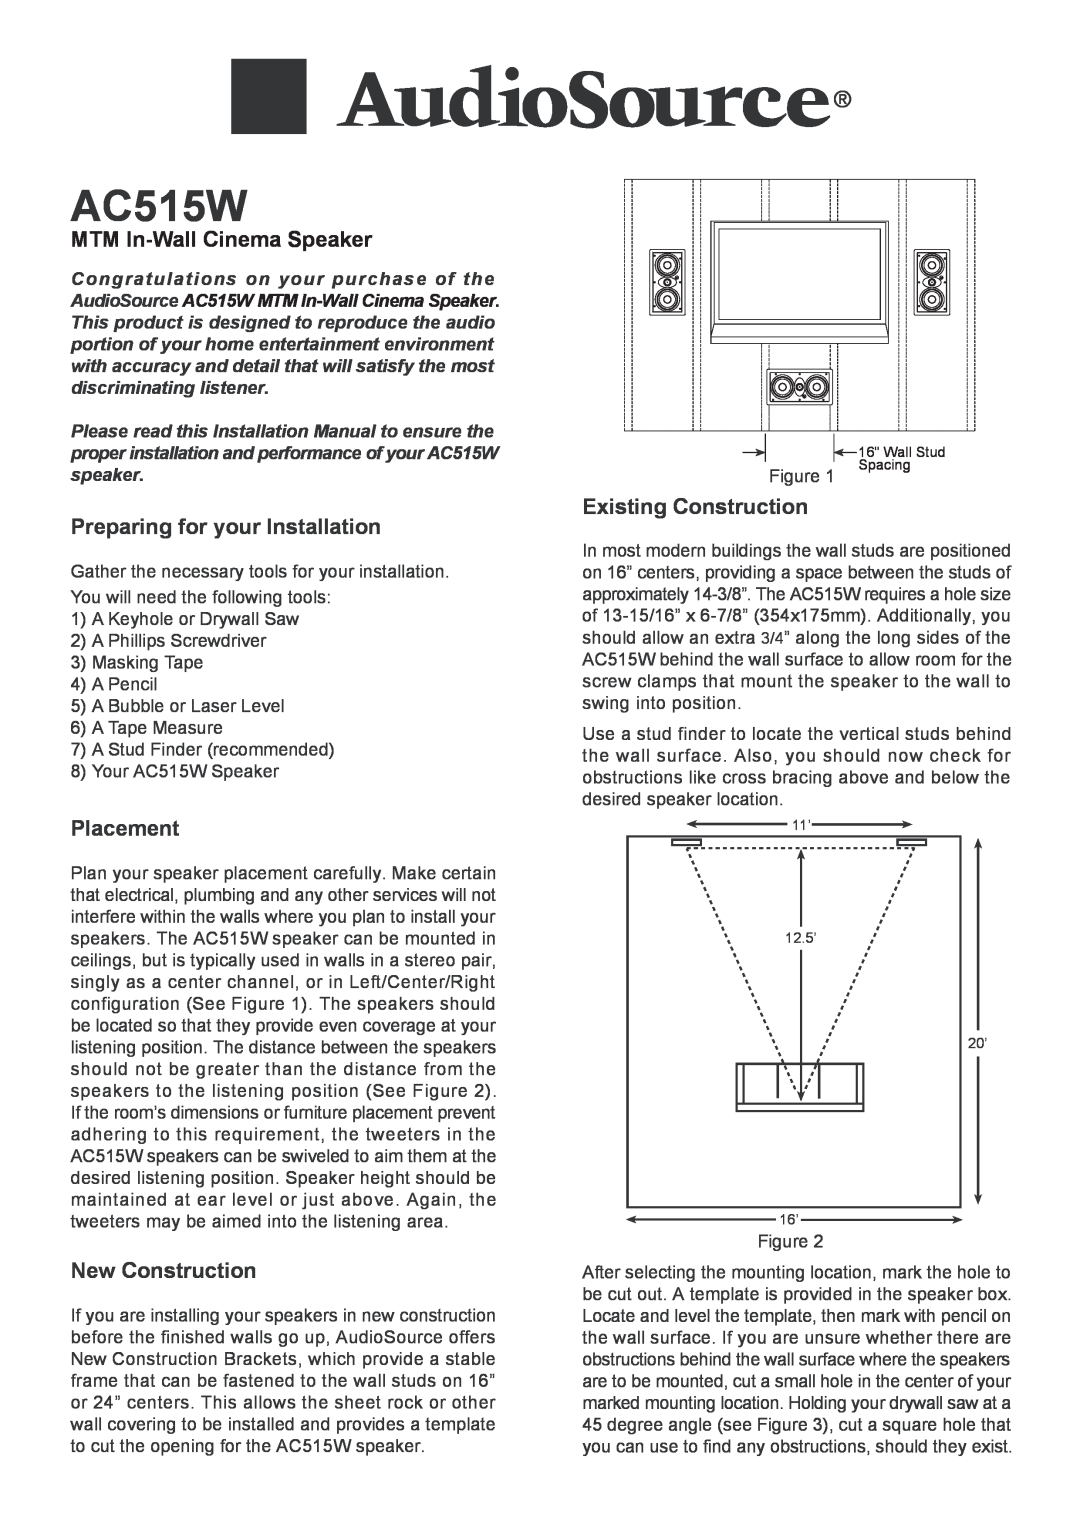 AudioSource AC515W installation manual MTM In-WallCinema Speaker, Preparing for your Installation, Placement 